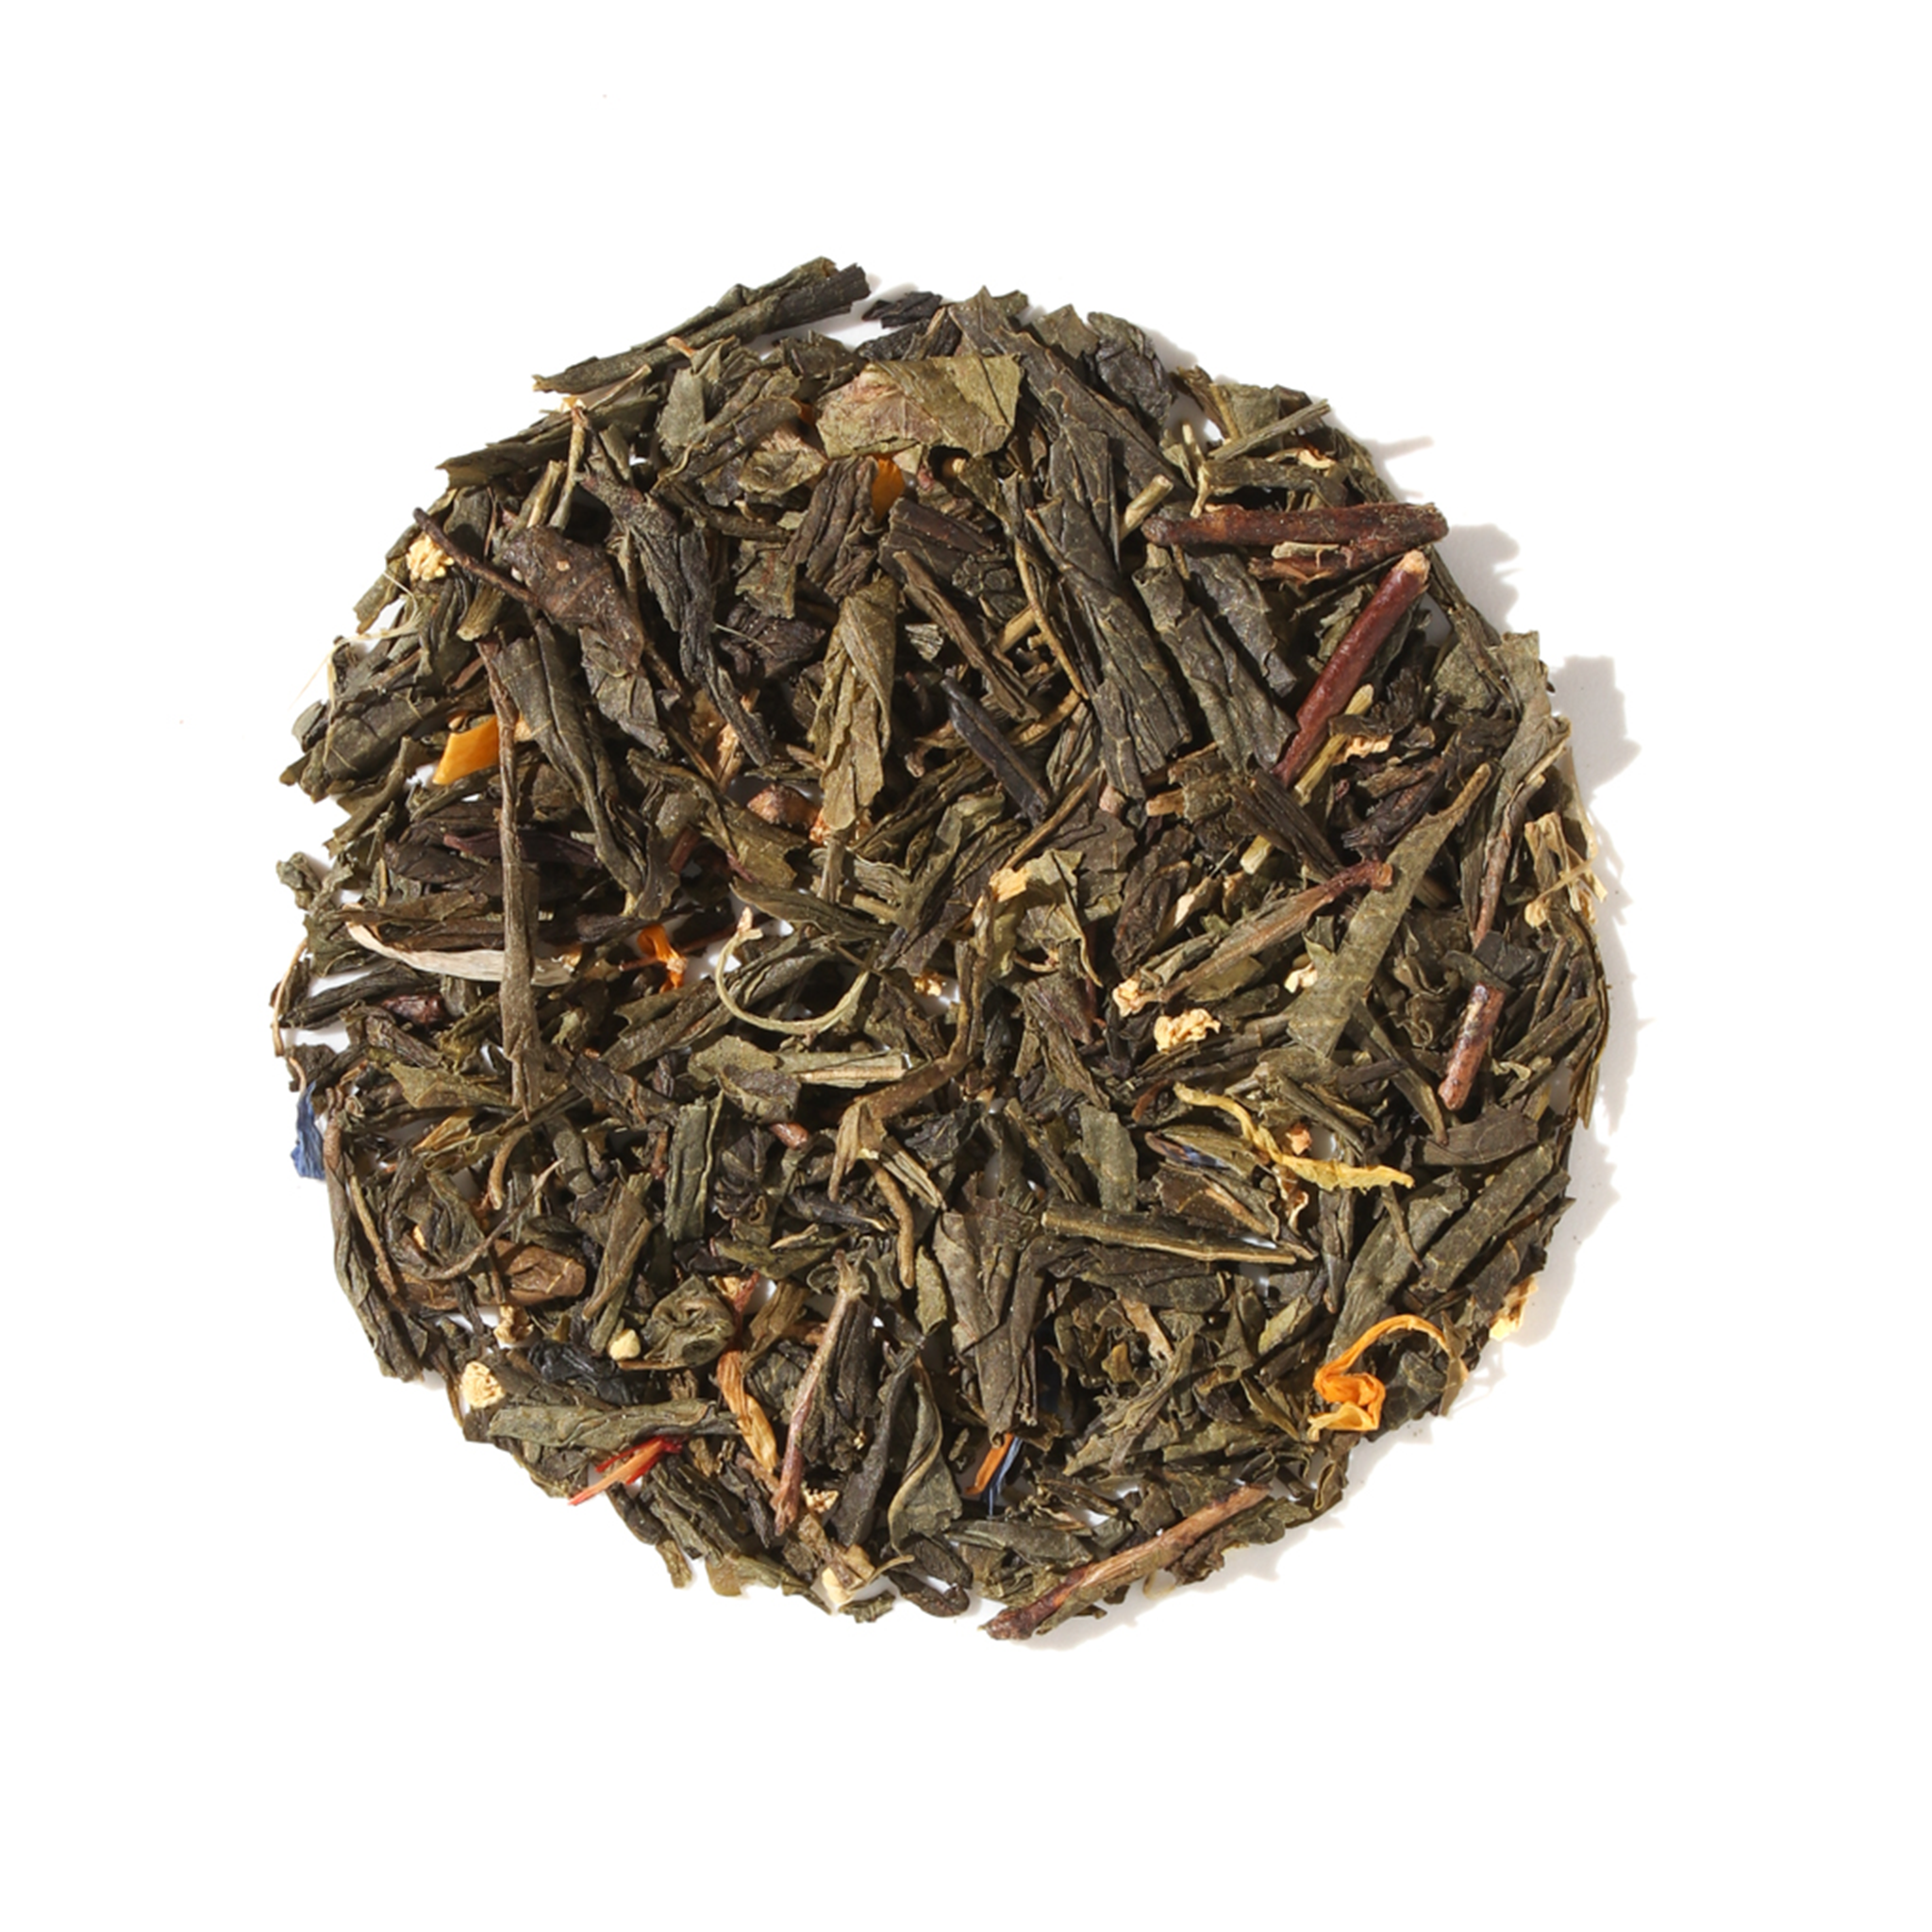 Abundance Blend Green Tea (Passionfruit - Elderflower) by Plum Deluxe Tea